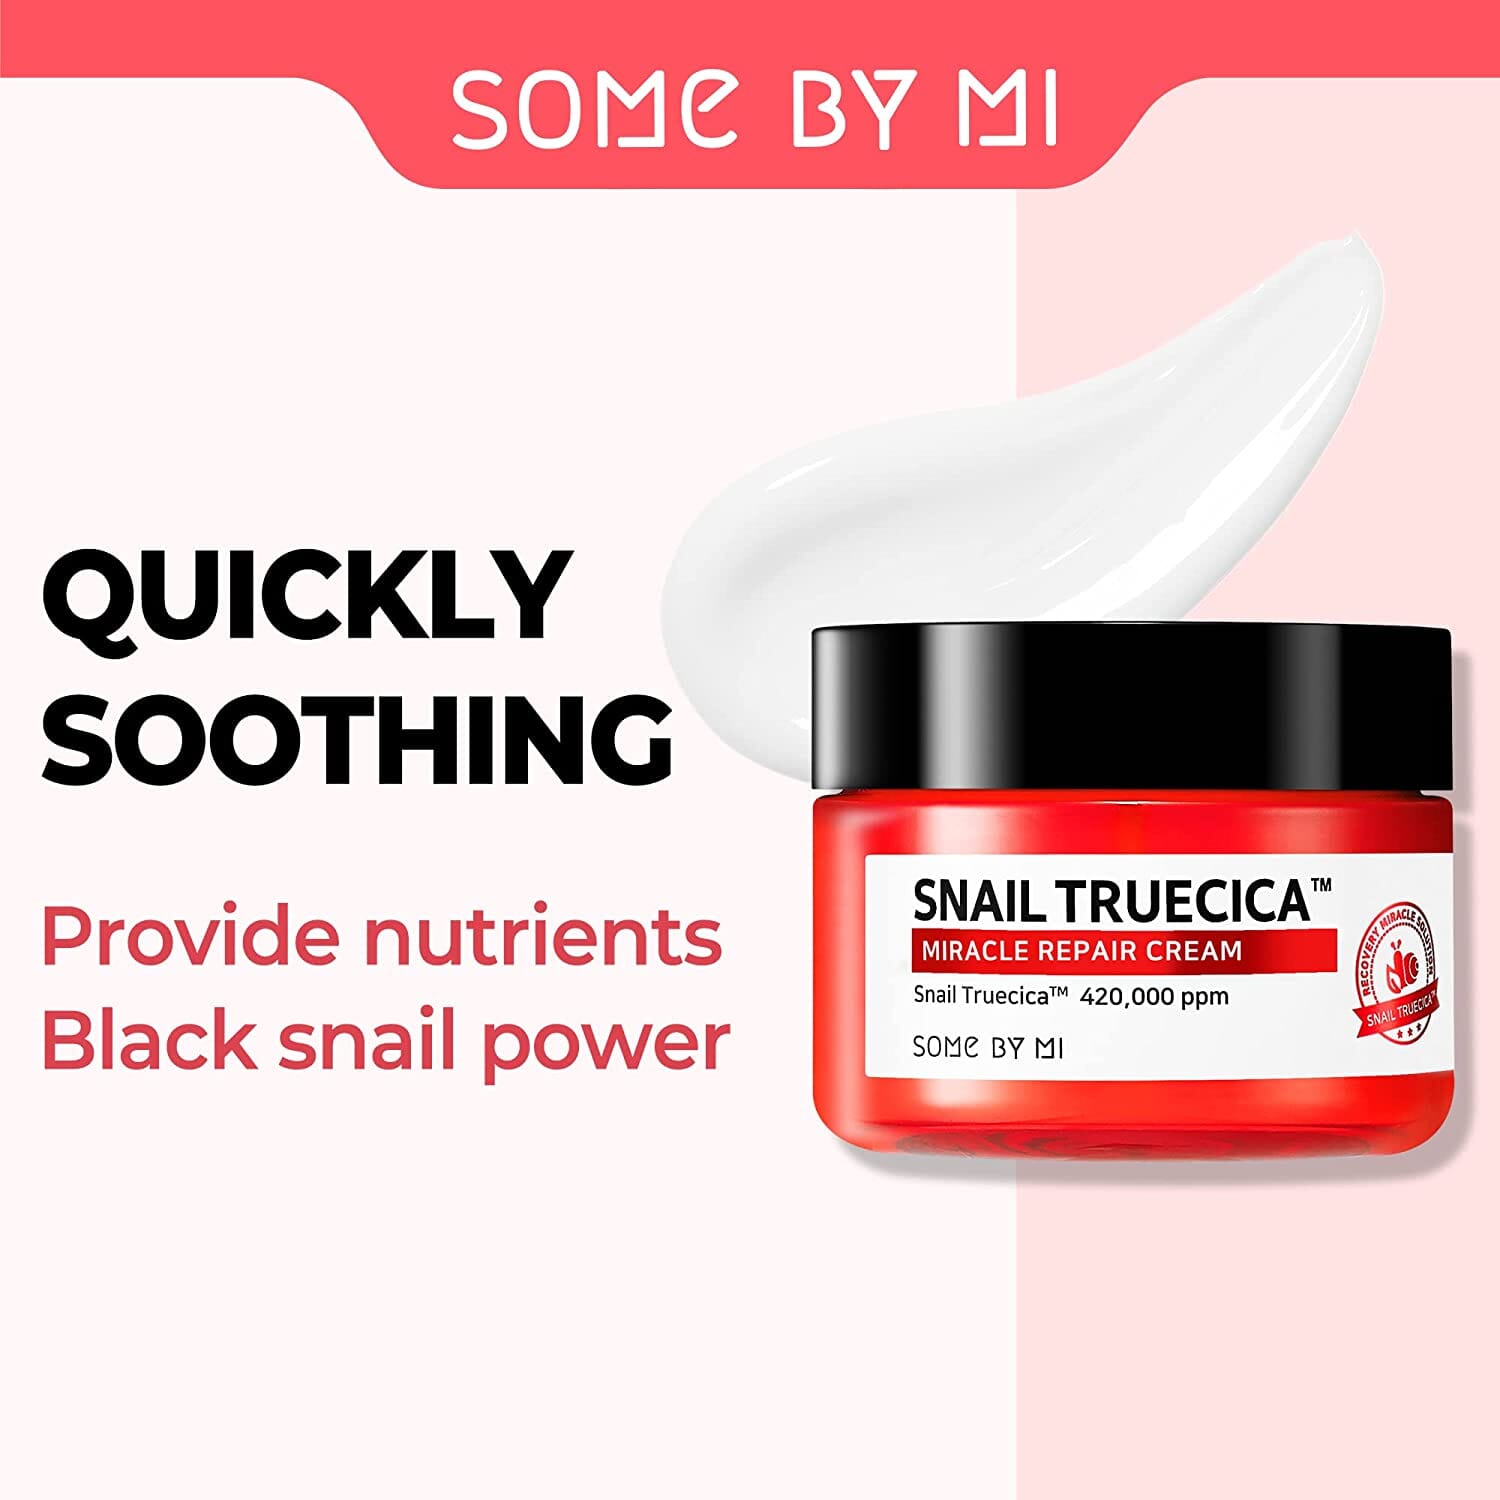 SOME BY MI Snail Truecica Miracle Repair Cream 60ml Skin Care SOME BY MI ORION XO Sri Lanka